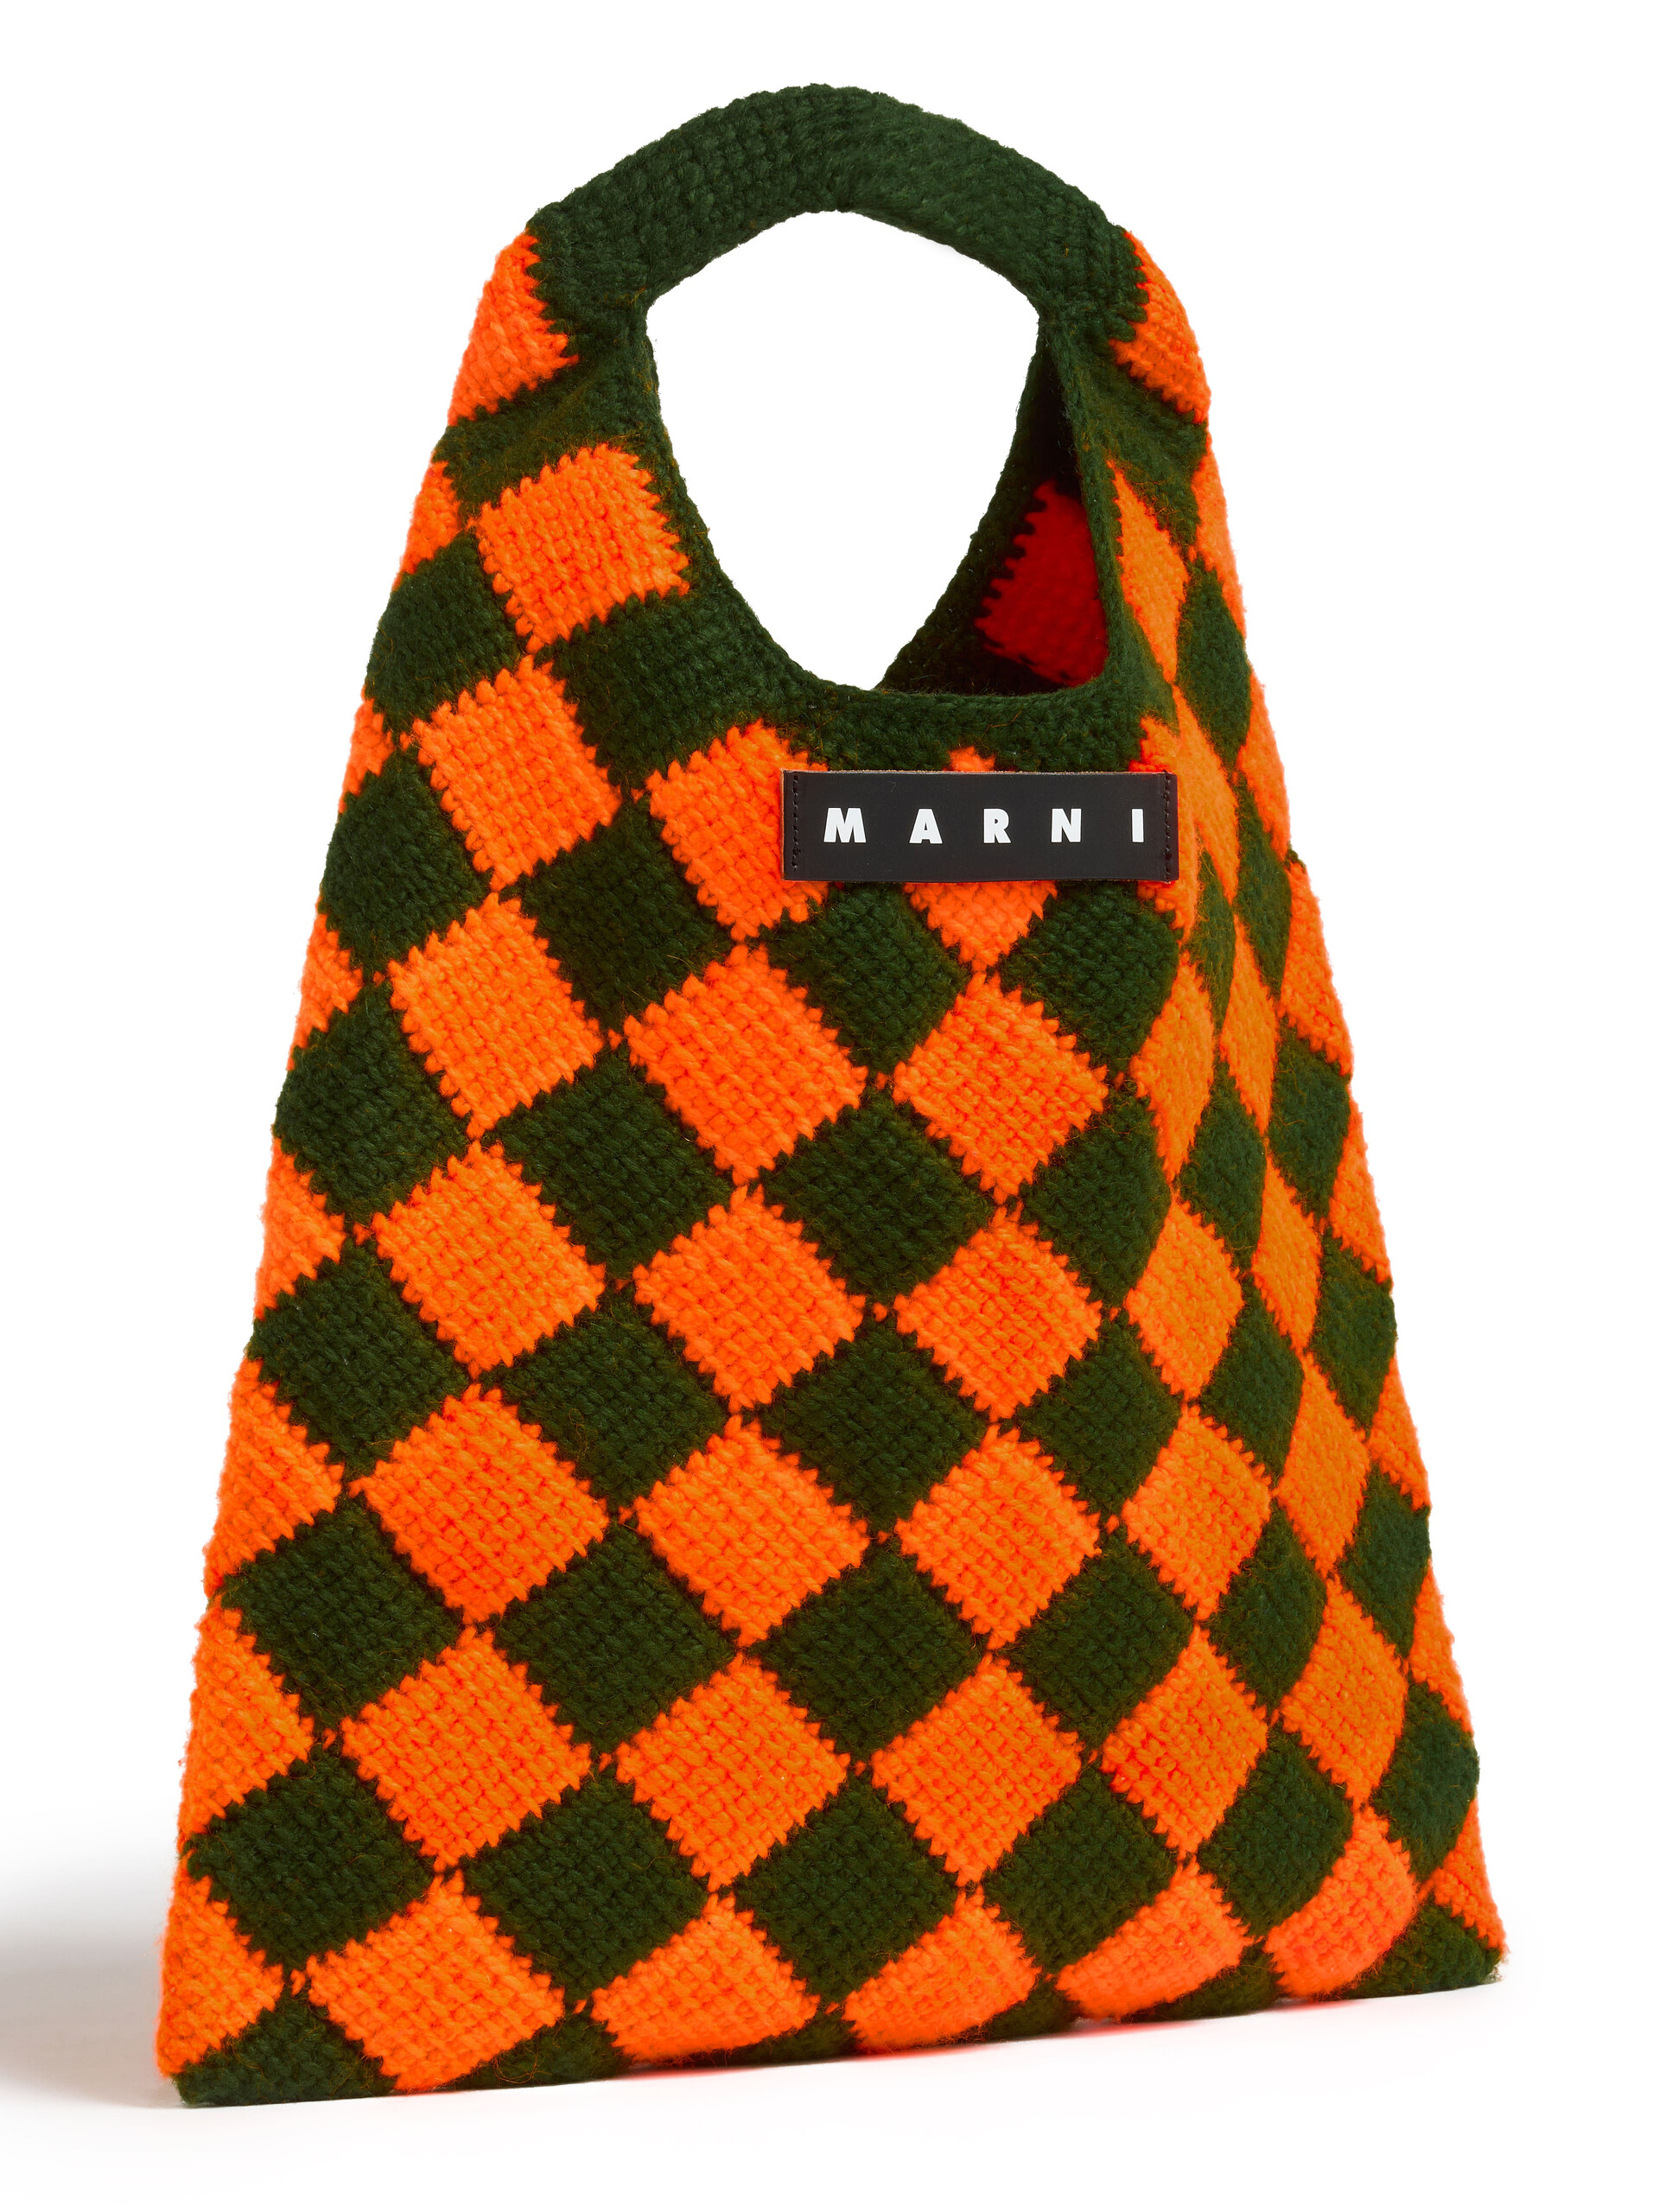 MARNI MARKET DIAMOND large bag in orange and brown tech wool - Shopping Bags - Image 4